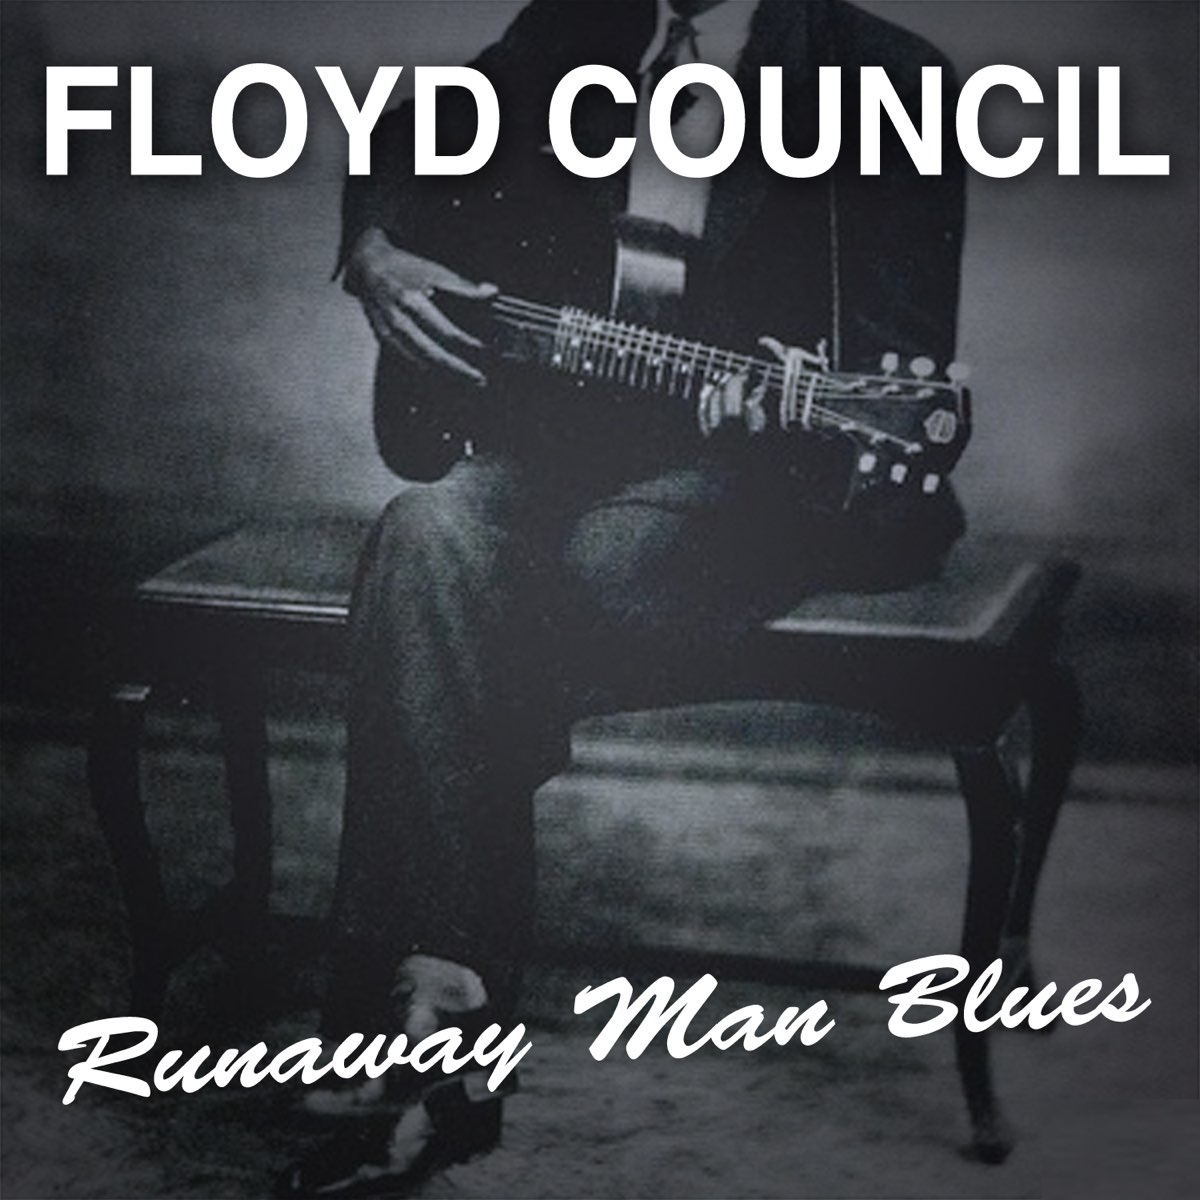 Floyd Councilの Runaway Man Blues Ep をapple Musicで